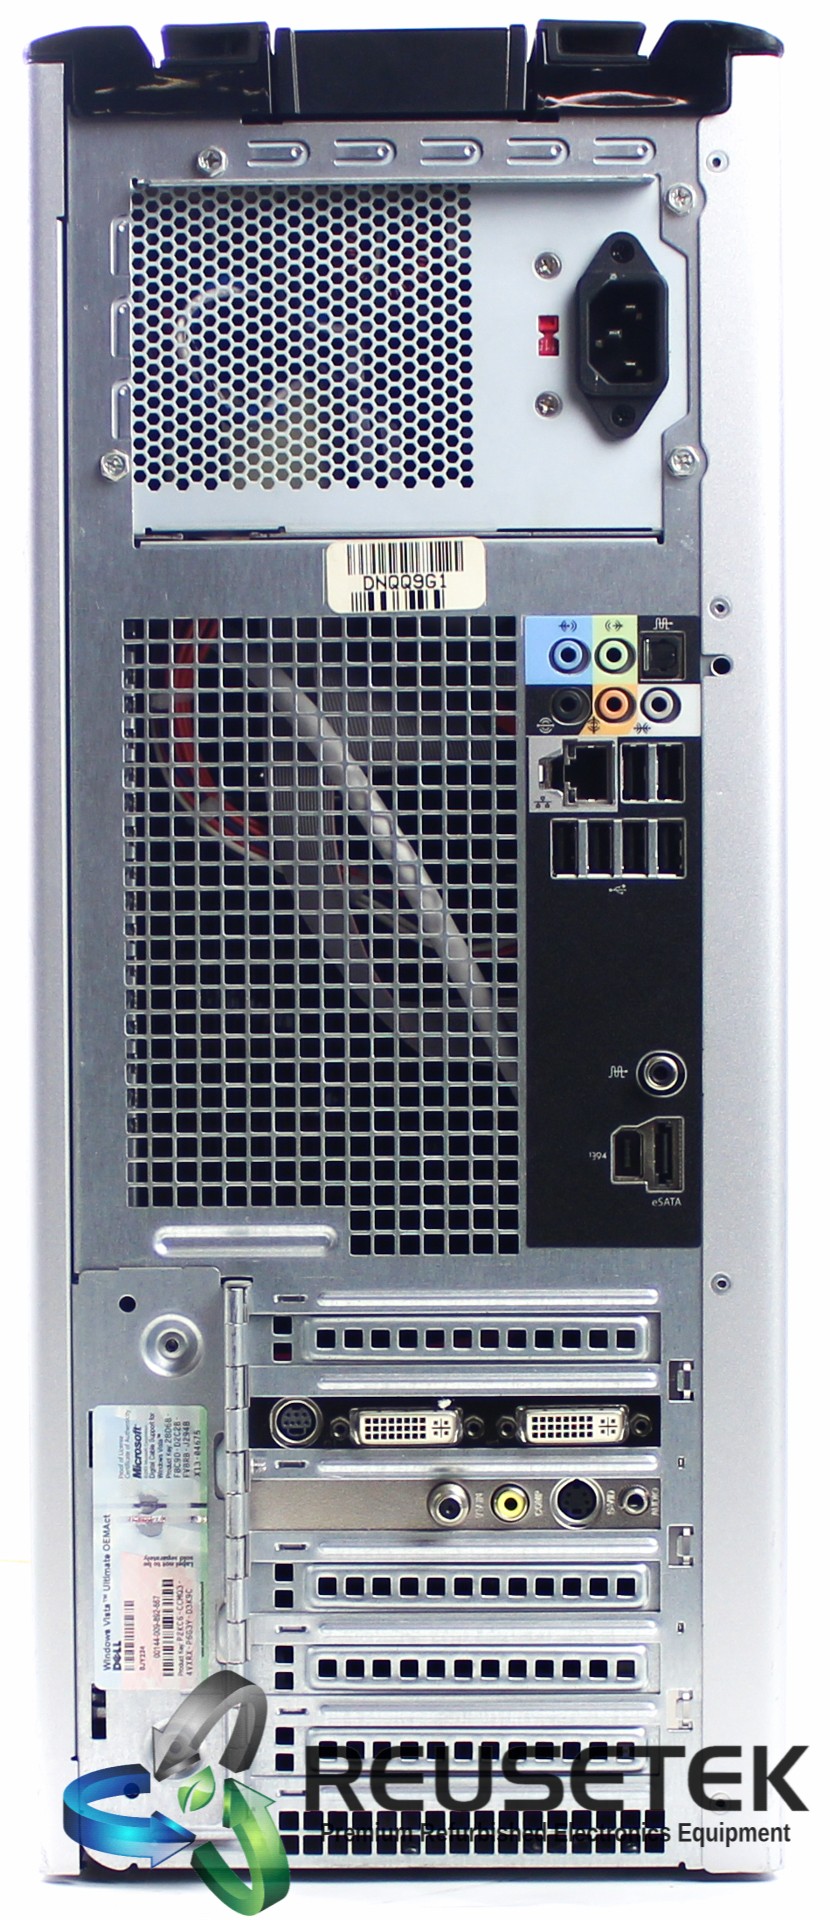 CDH5087-Dell XPS 420 DC01L Desktop PC-image